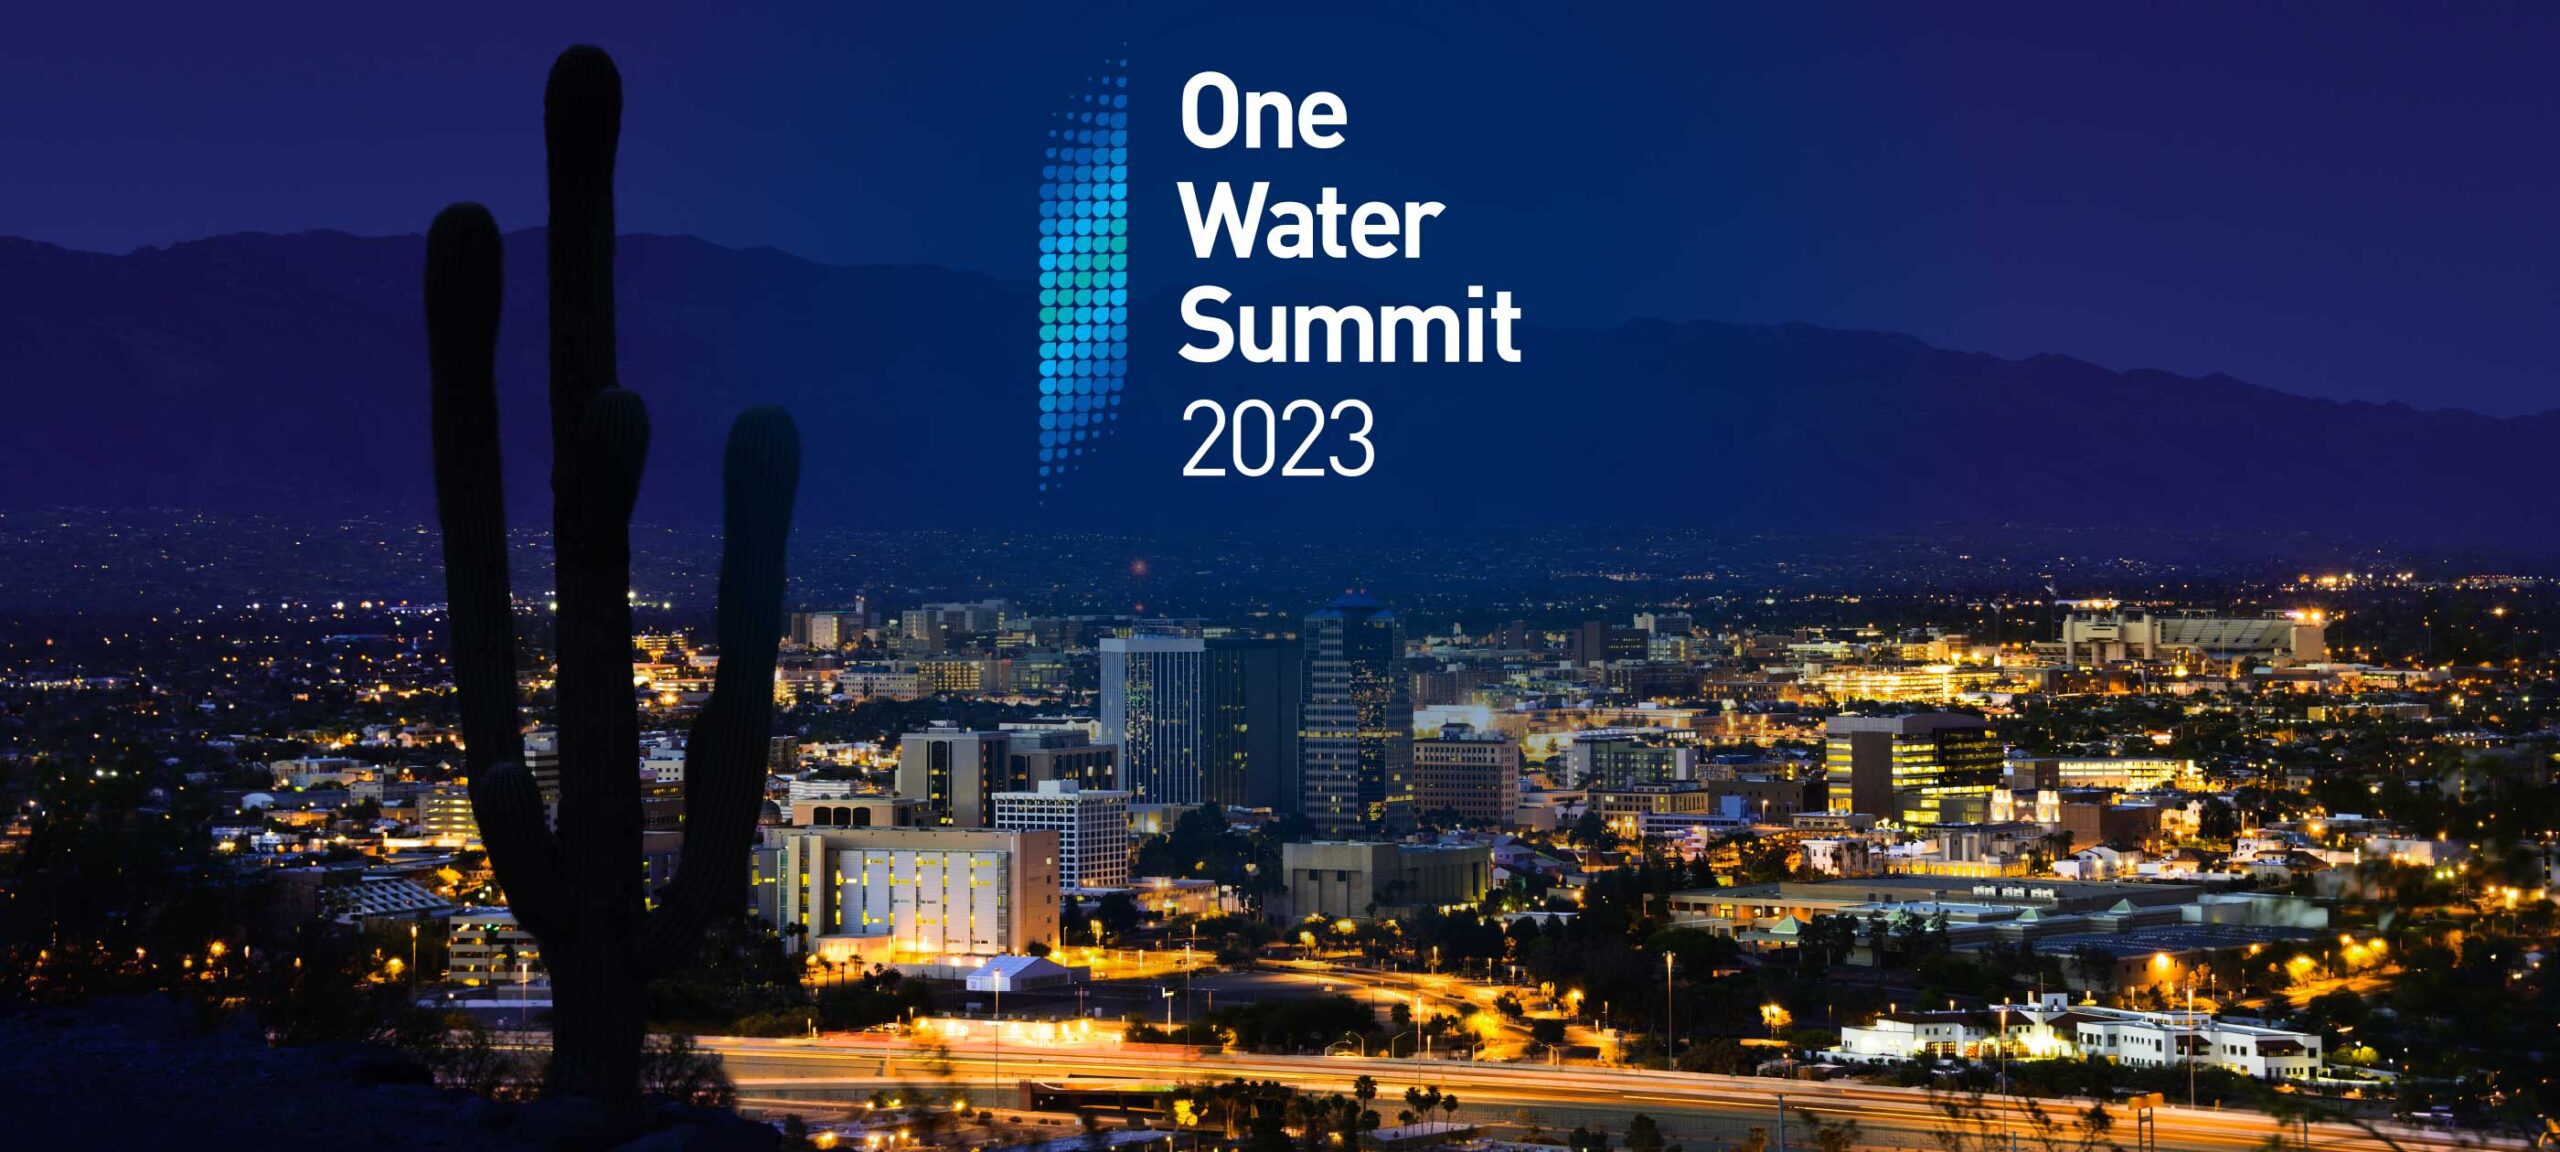 One Water Summit Nov 14 - 16 2023 Tucson Arizona banner night sky Tucson cactus